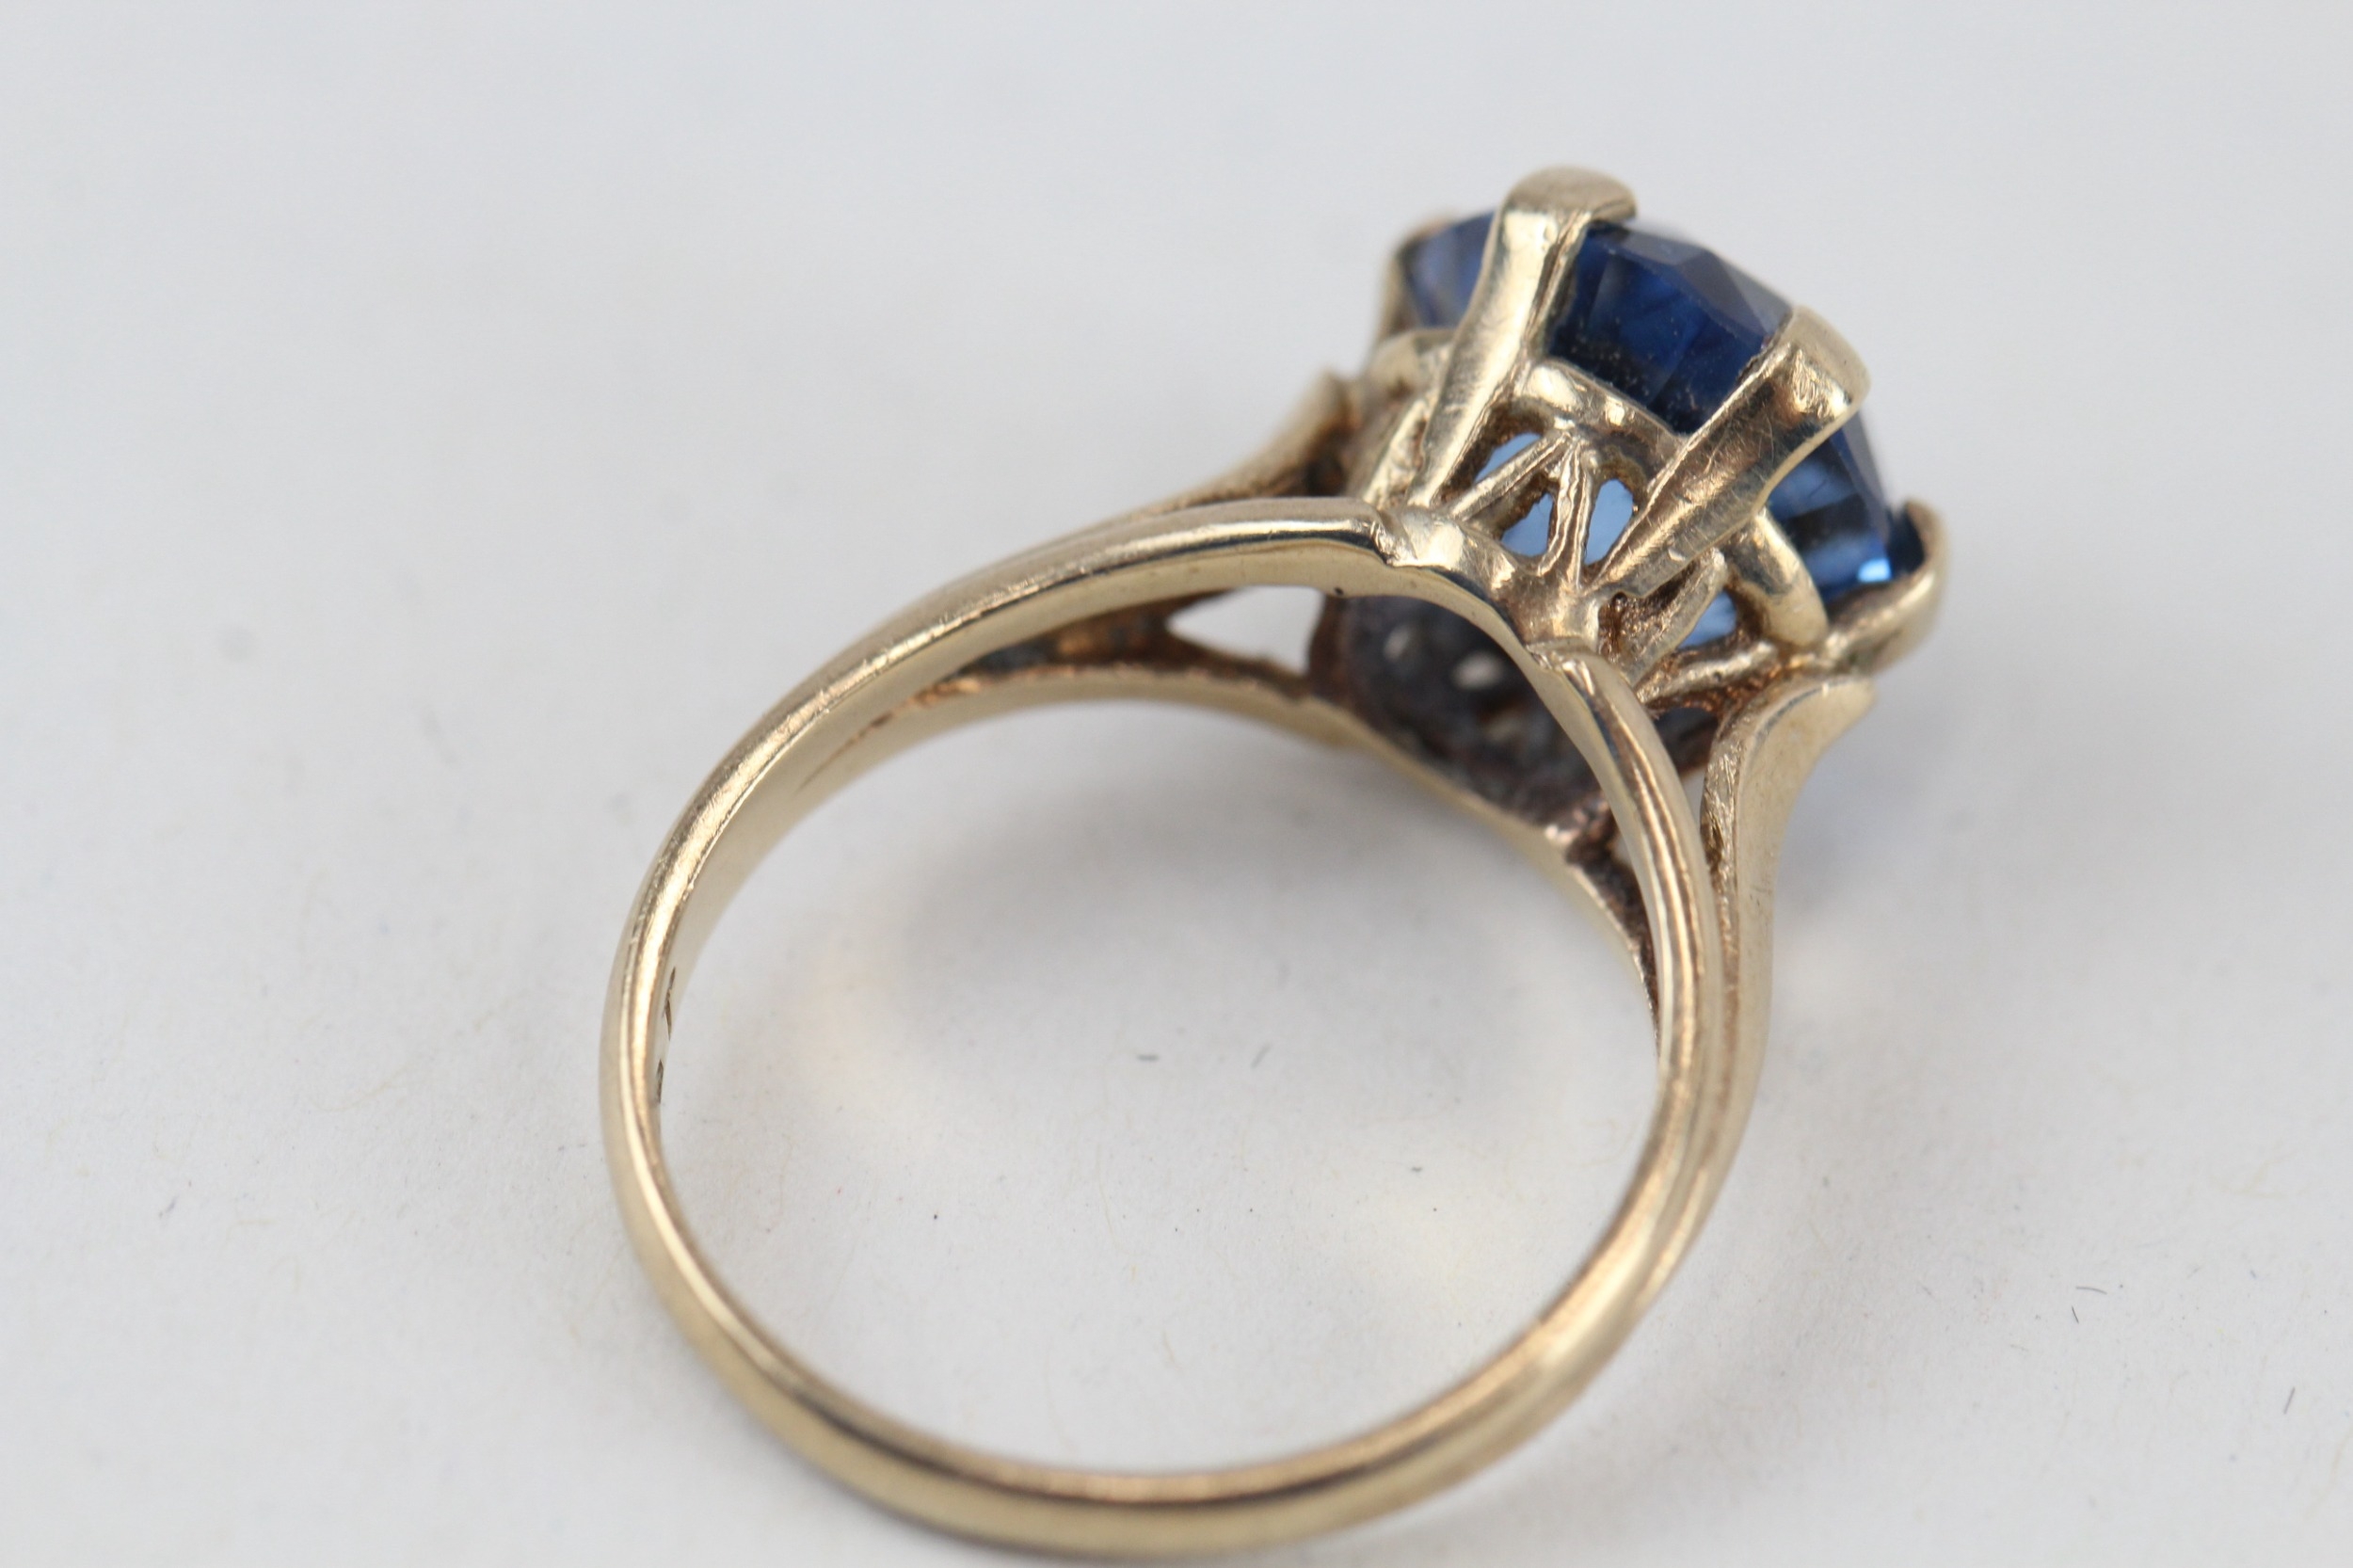 9ct gold blue gemstone dress ring, claw set (3.3g) - Image 4 of 4